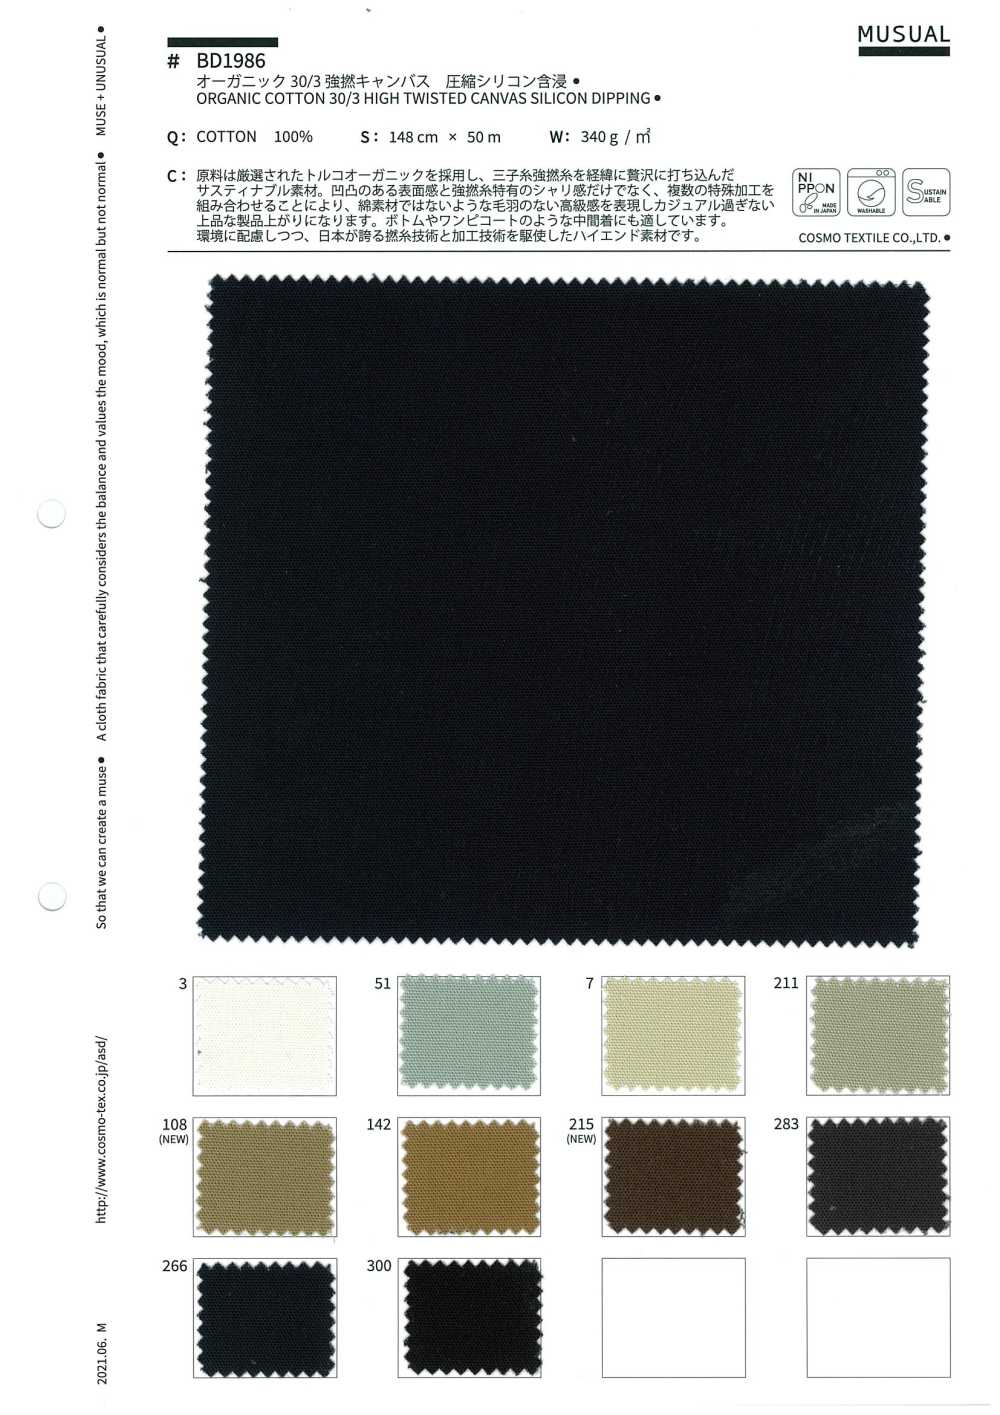 BD1986 有机棉 30/3 高捻帆布压缩硅胶含浸加工[面料] Cosmo Textile 日本